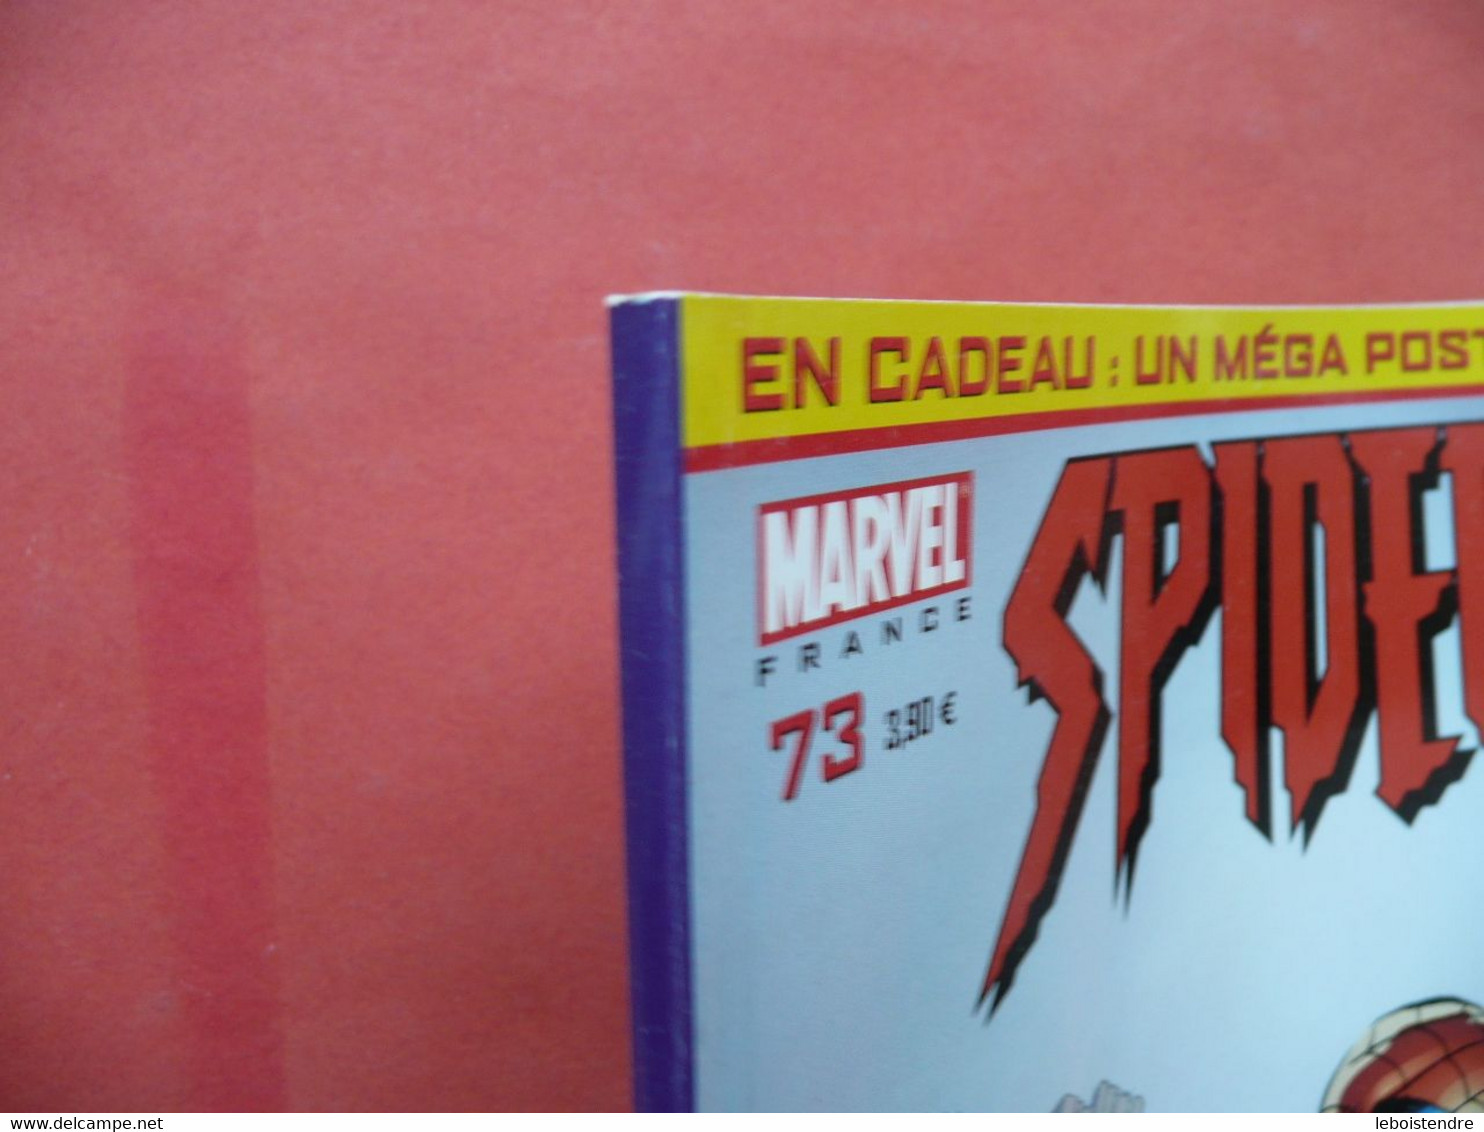 SPIDERMAN V2 SPIDER-MAN N 73 FEVRIER 2006 COLLECTOR EDITION  PANINI COMICS MARVEL - Spiderman